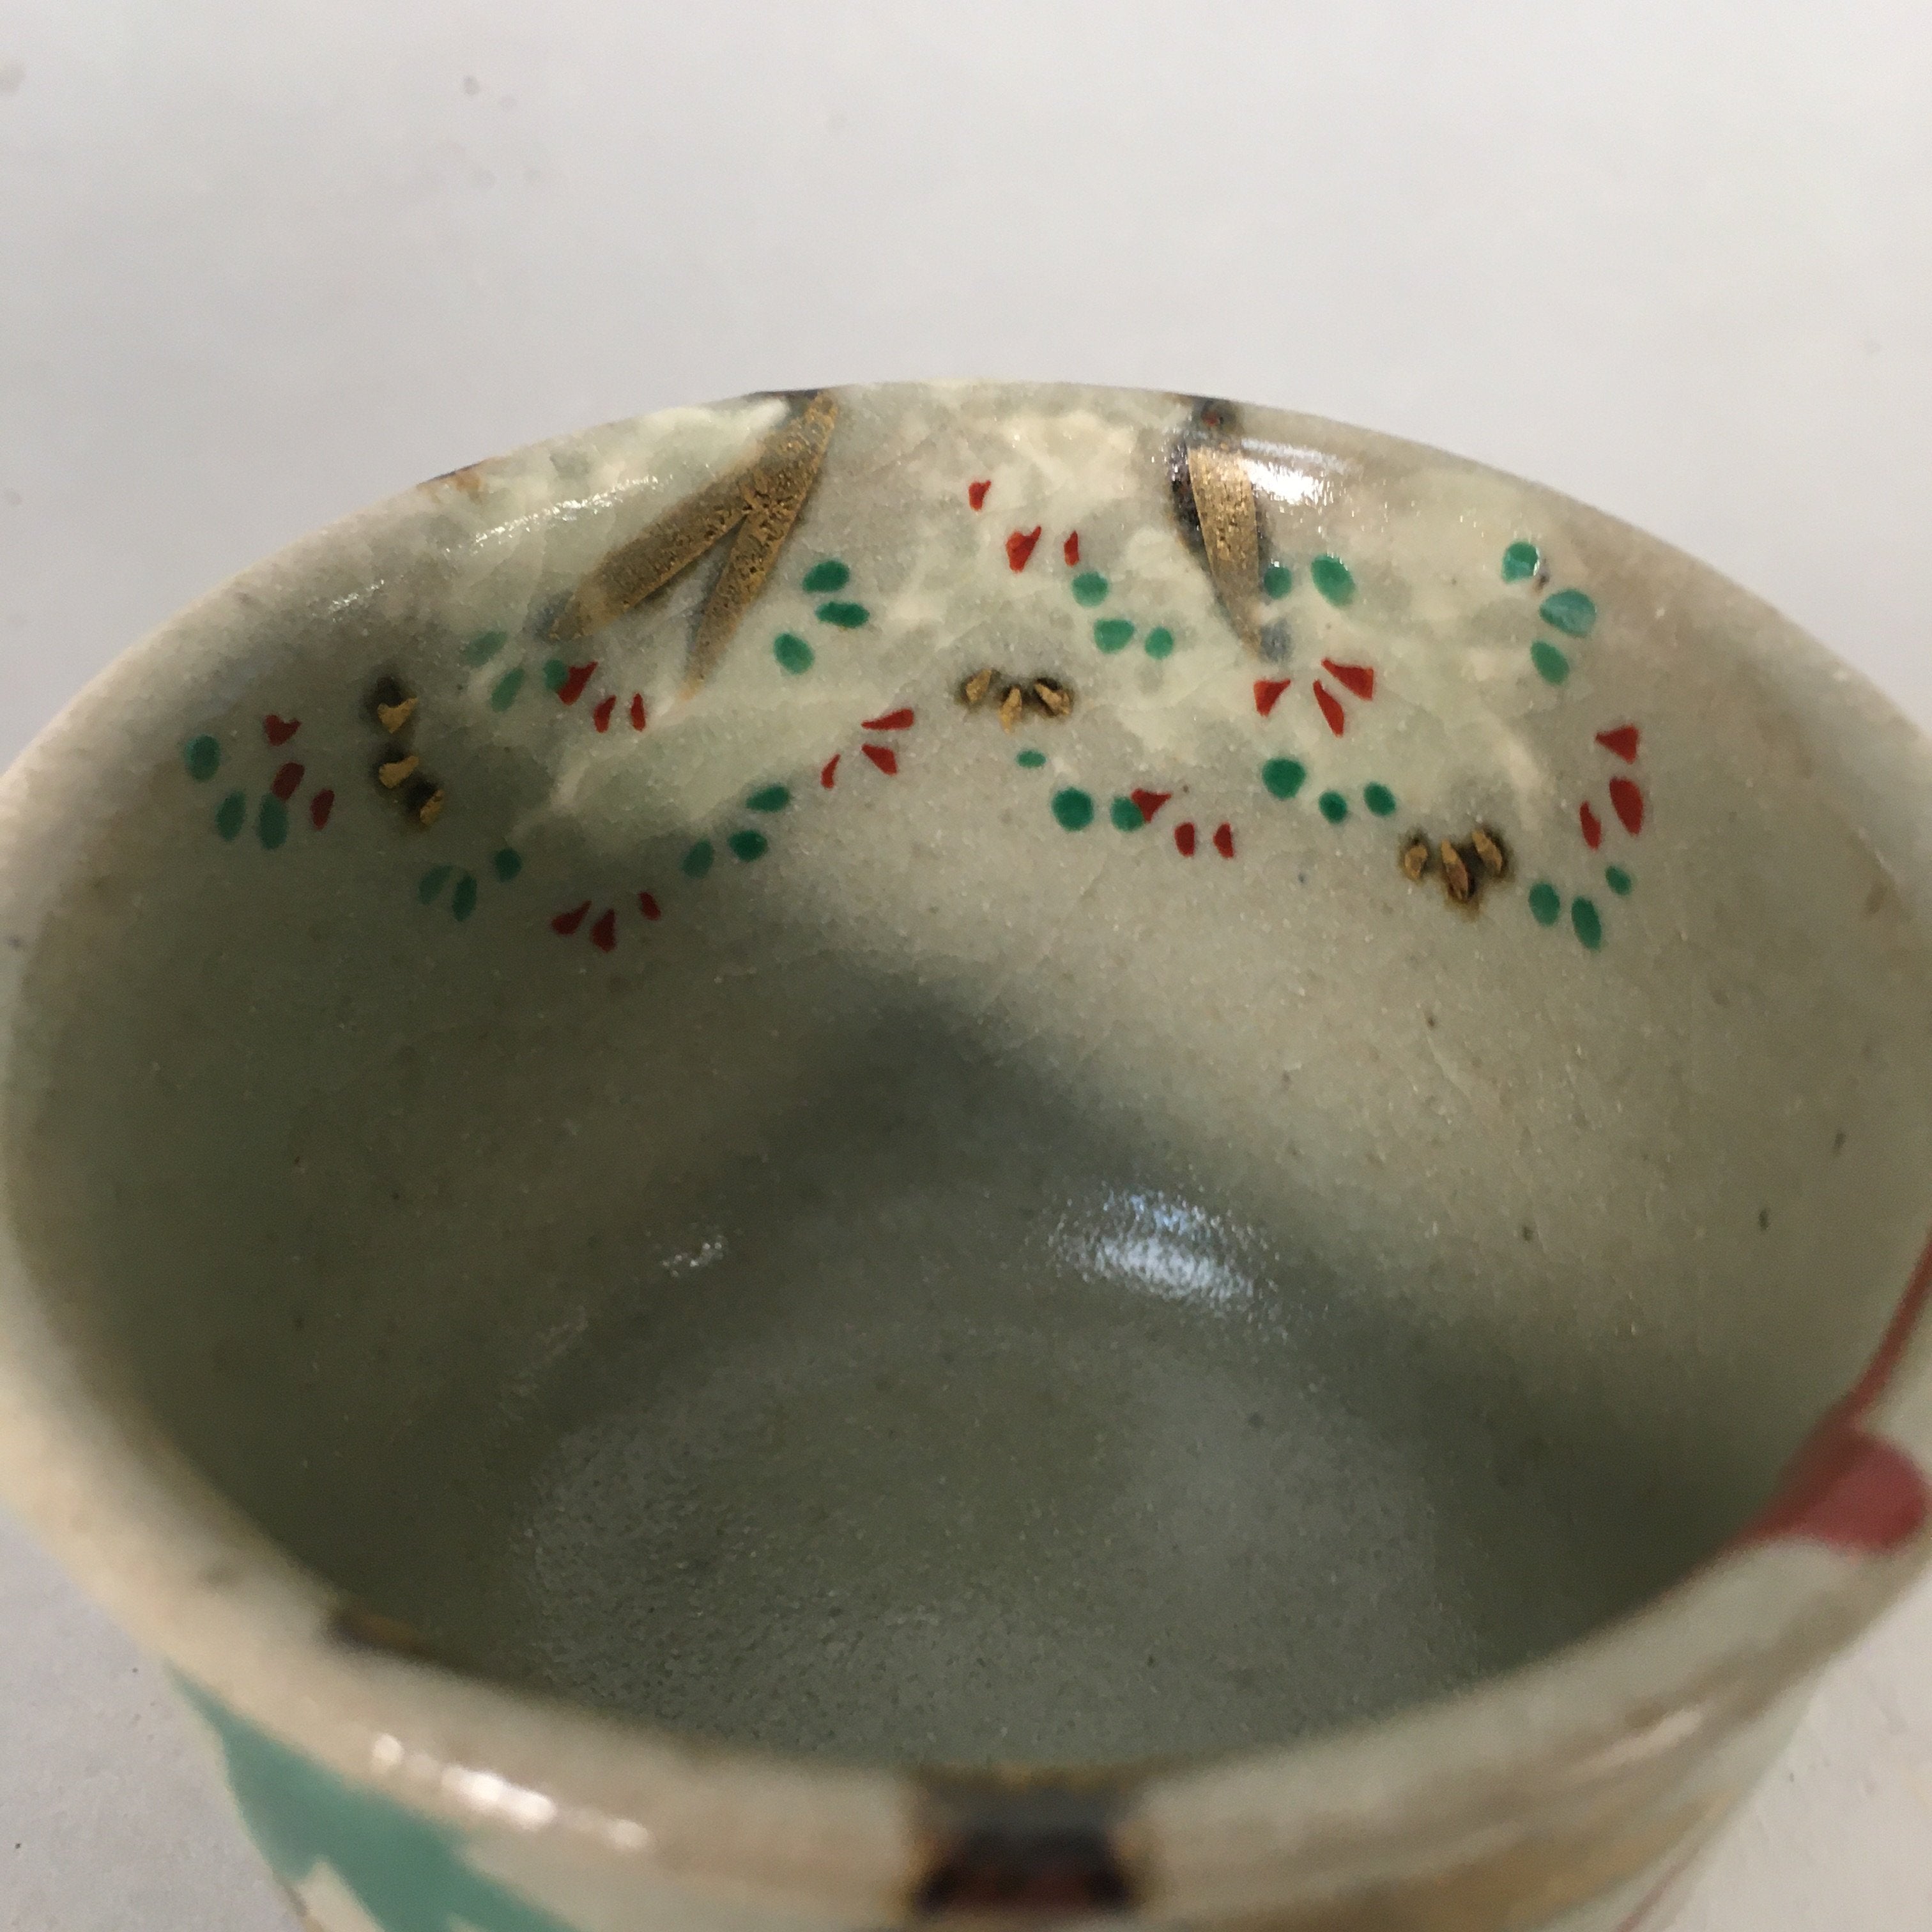 Japanese Ceramic Teacup Vtg Pottery Cherry Bloossom Autumn Leaf Sencha TC180